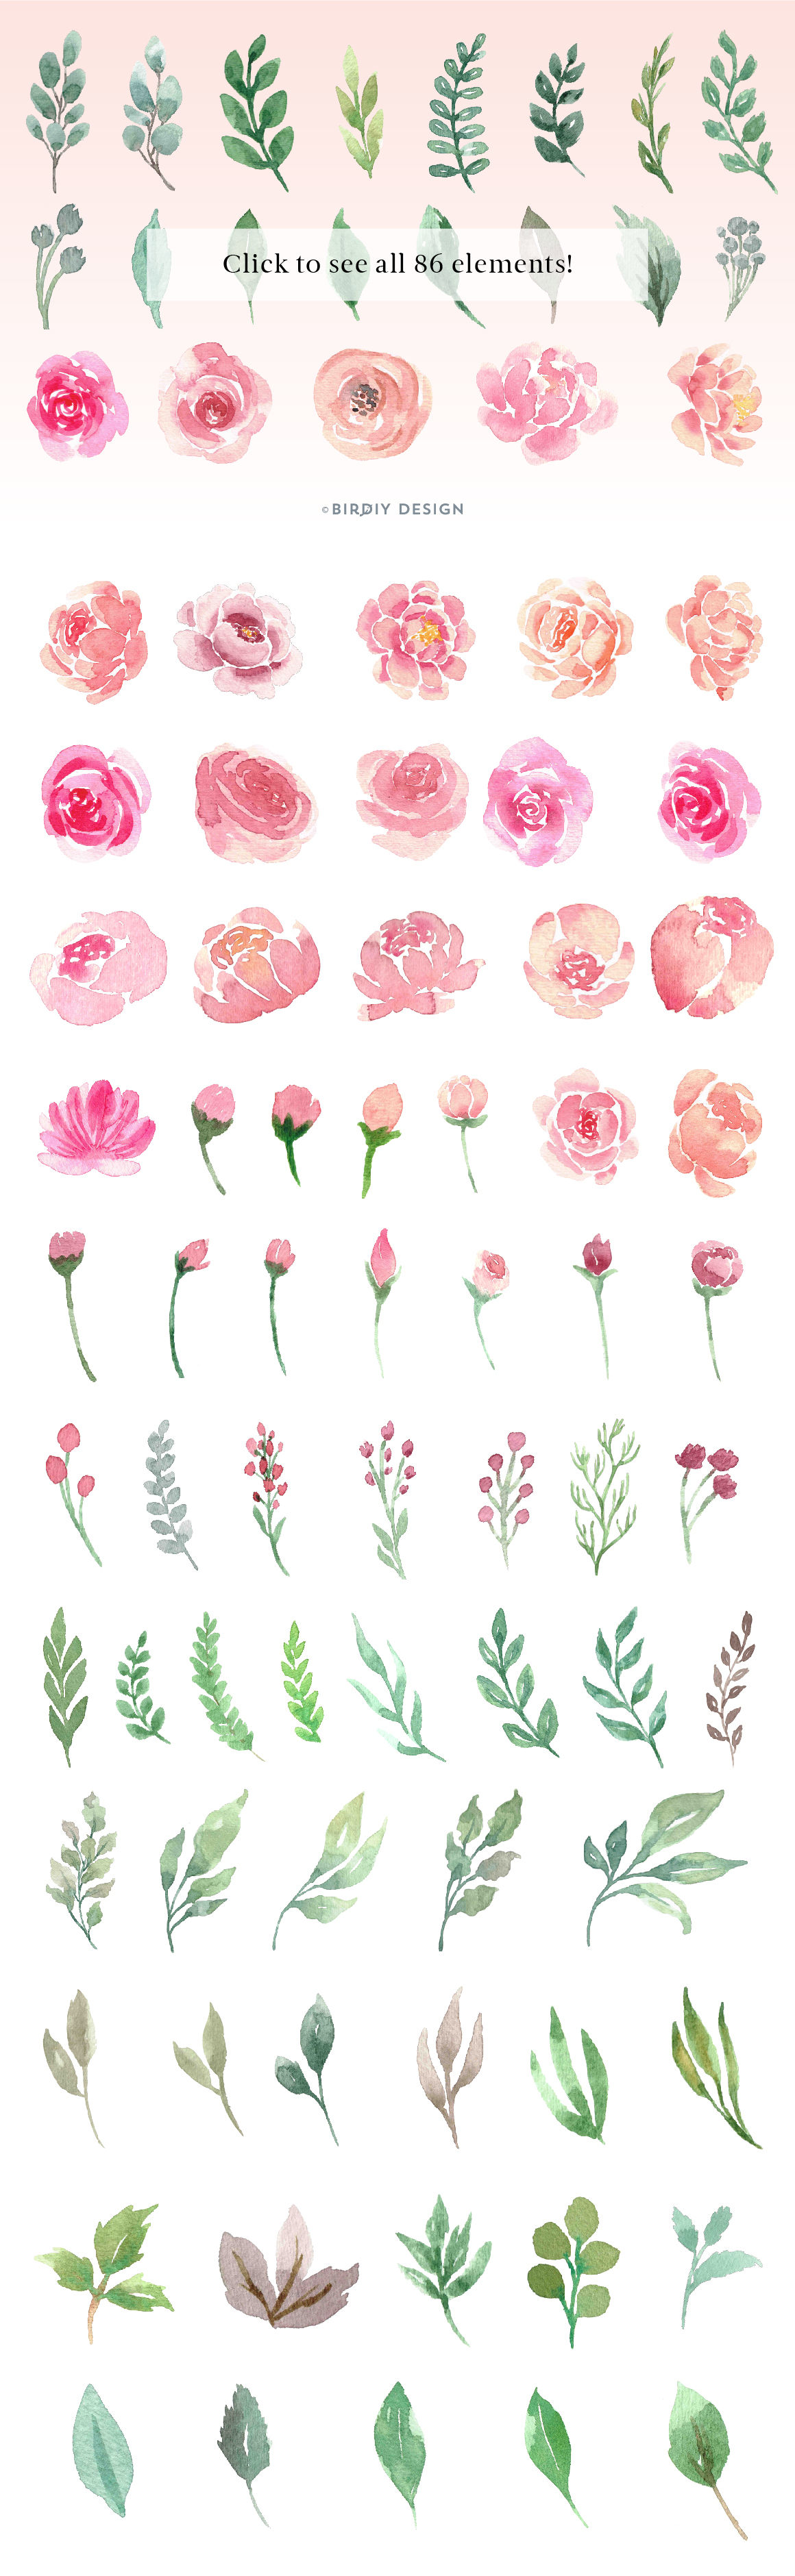 Loose Watercolor Roses & Peonies By BirDIY Design | TheHungryJPEG